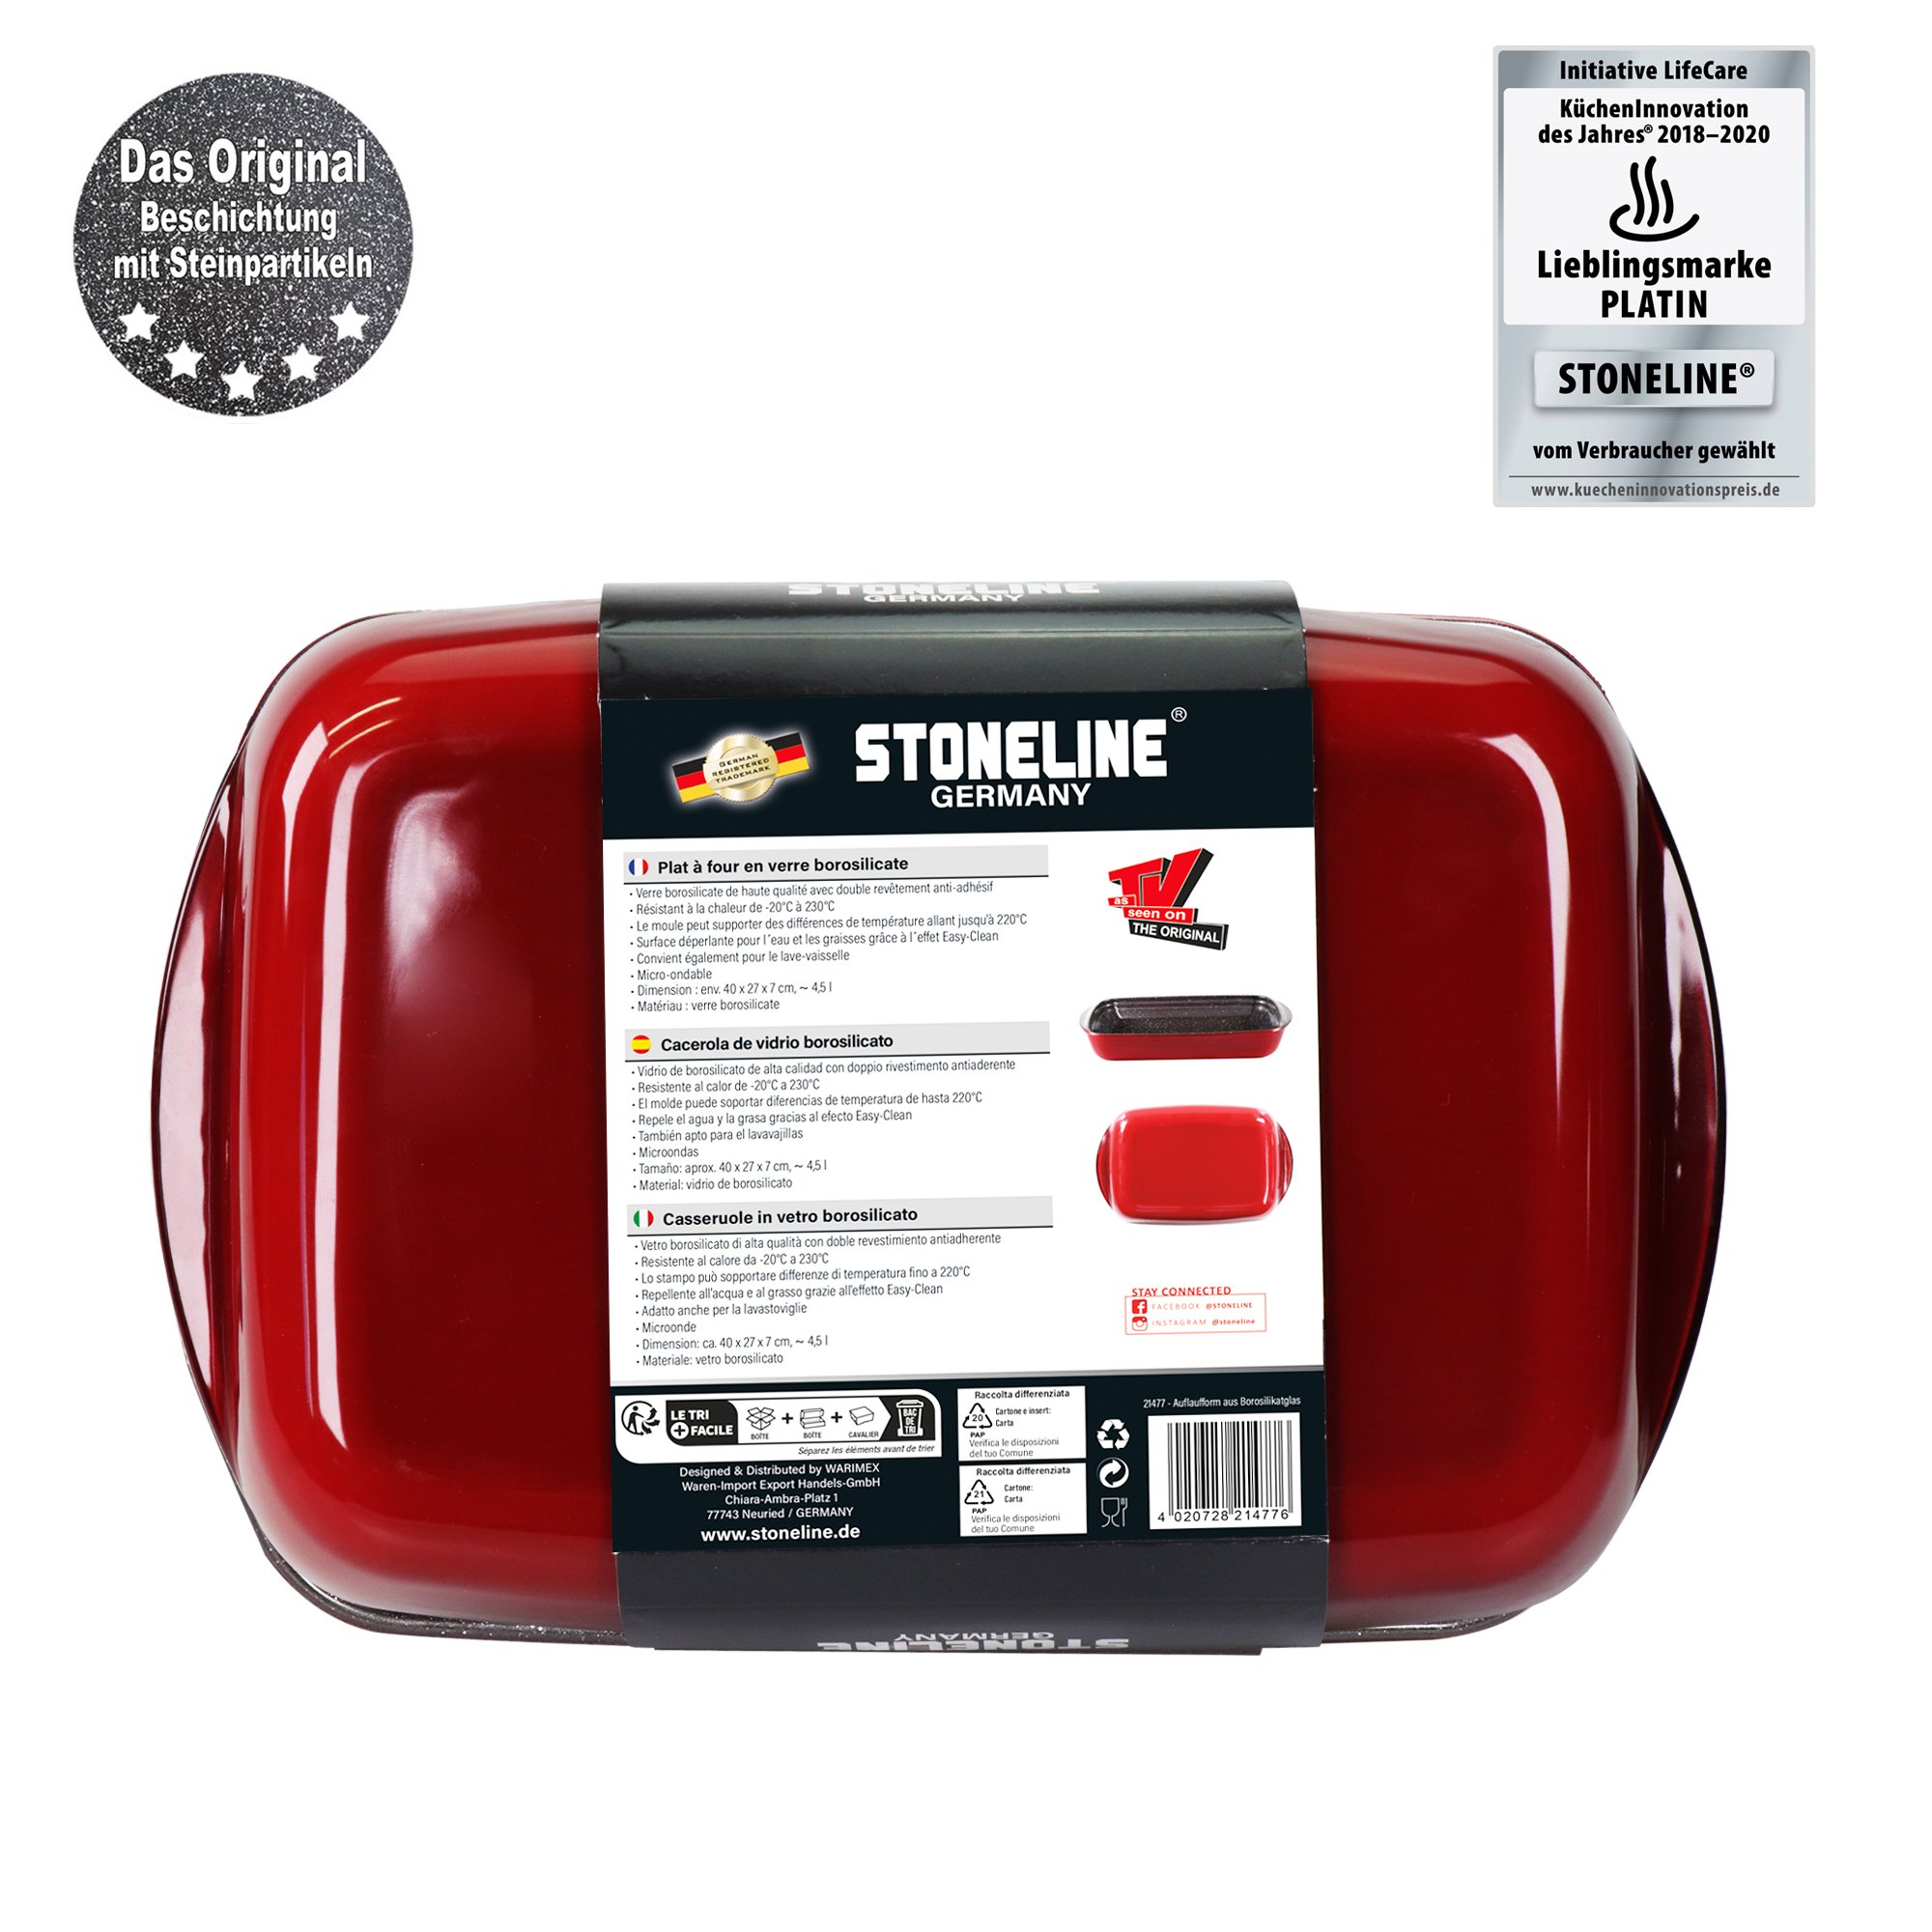 STONELINE® Rectangular Baking Dish 40x27 cm | Non-Stick Borosilicate Glass Oven Dish